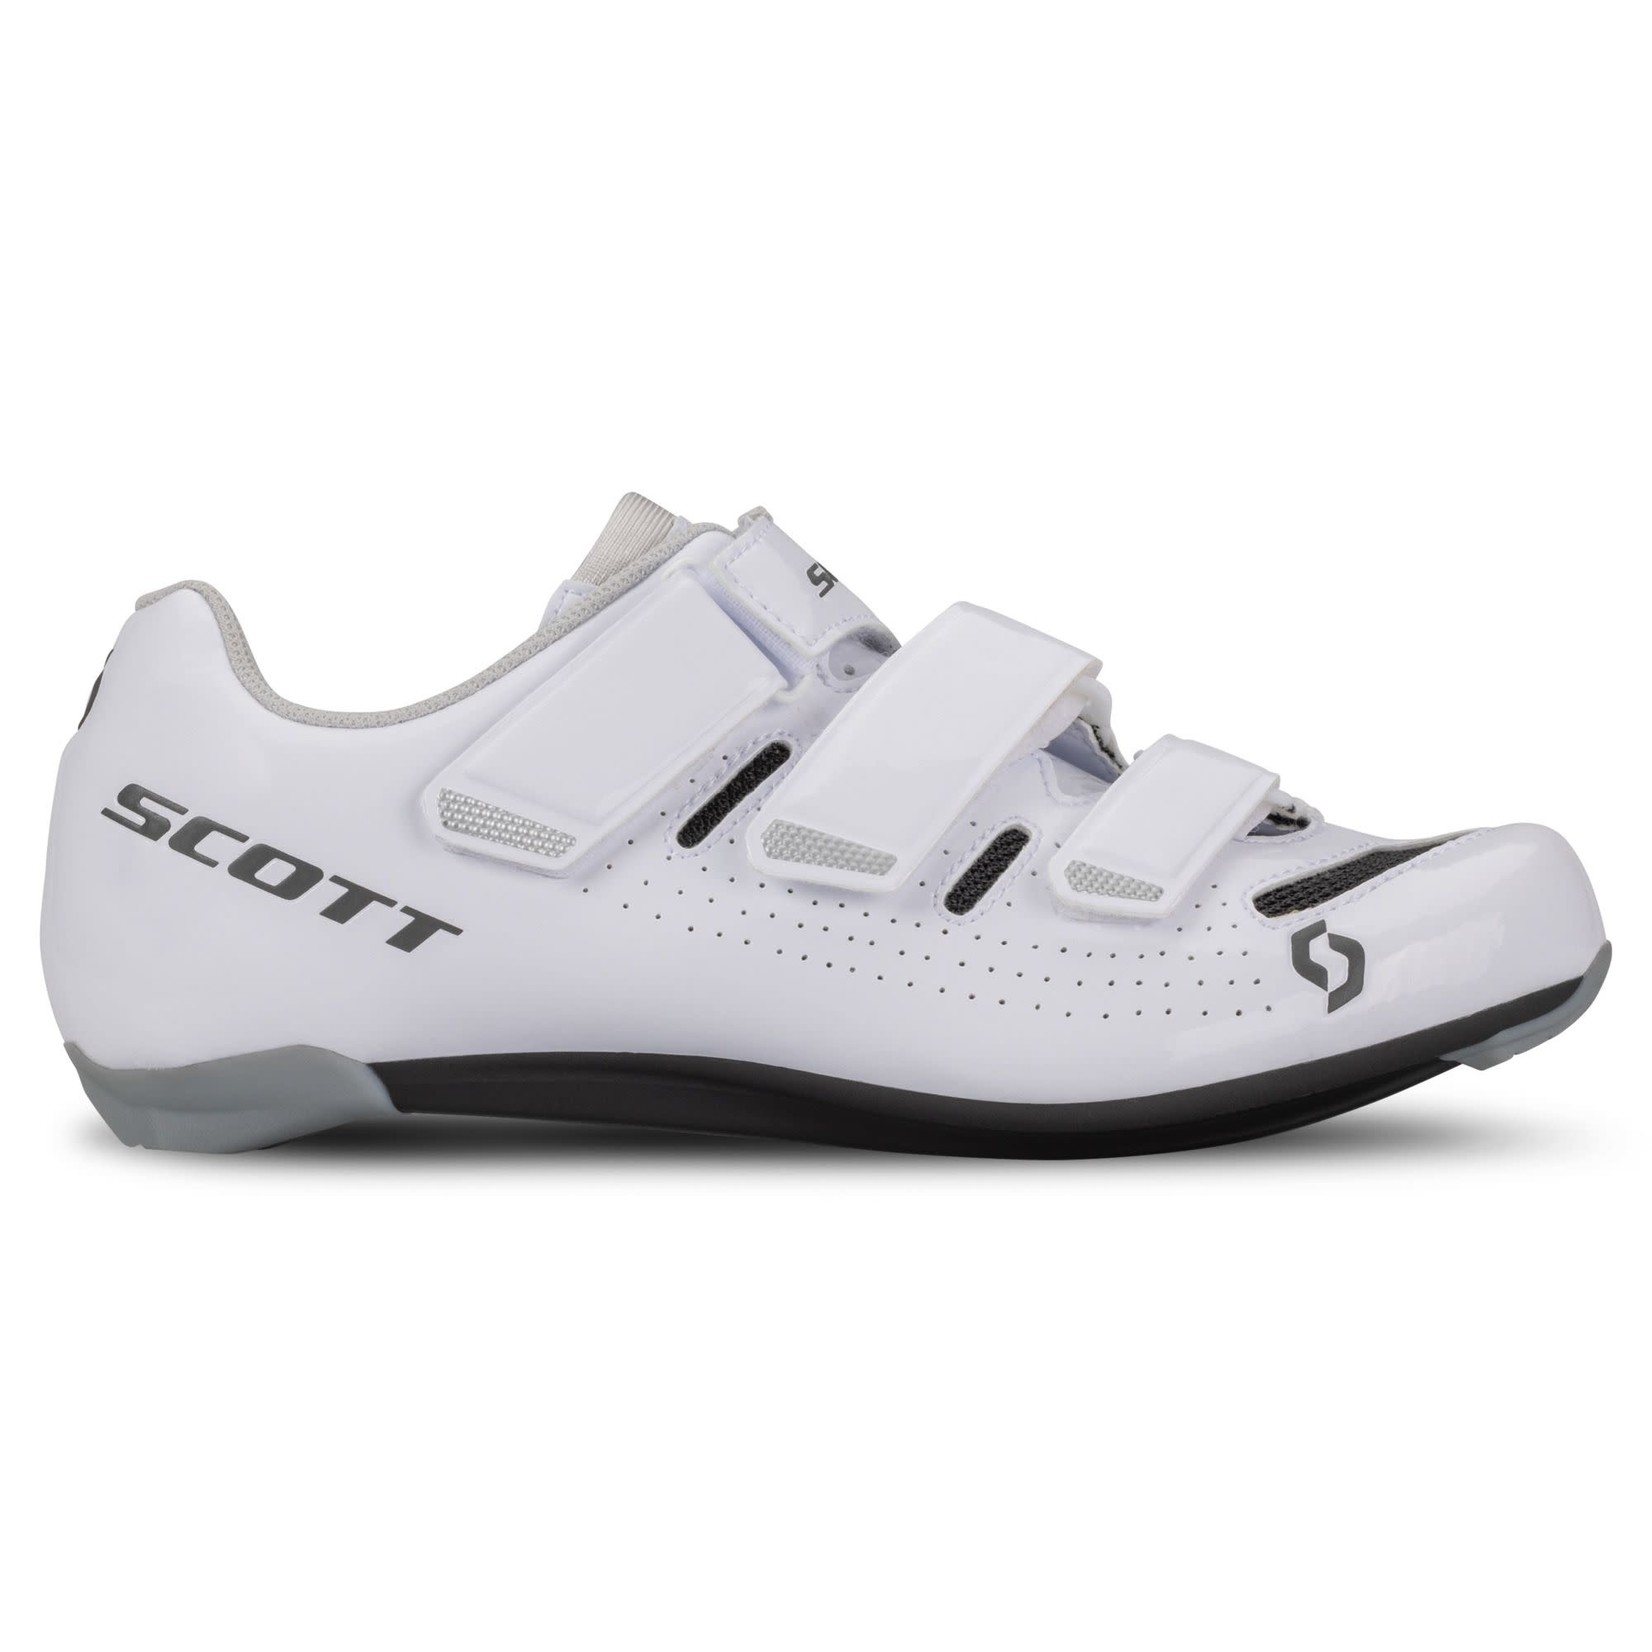 Scott Scott Road Comp Women's Cycling Shoe